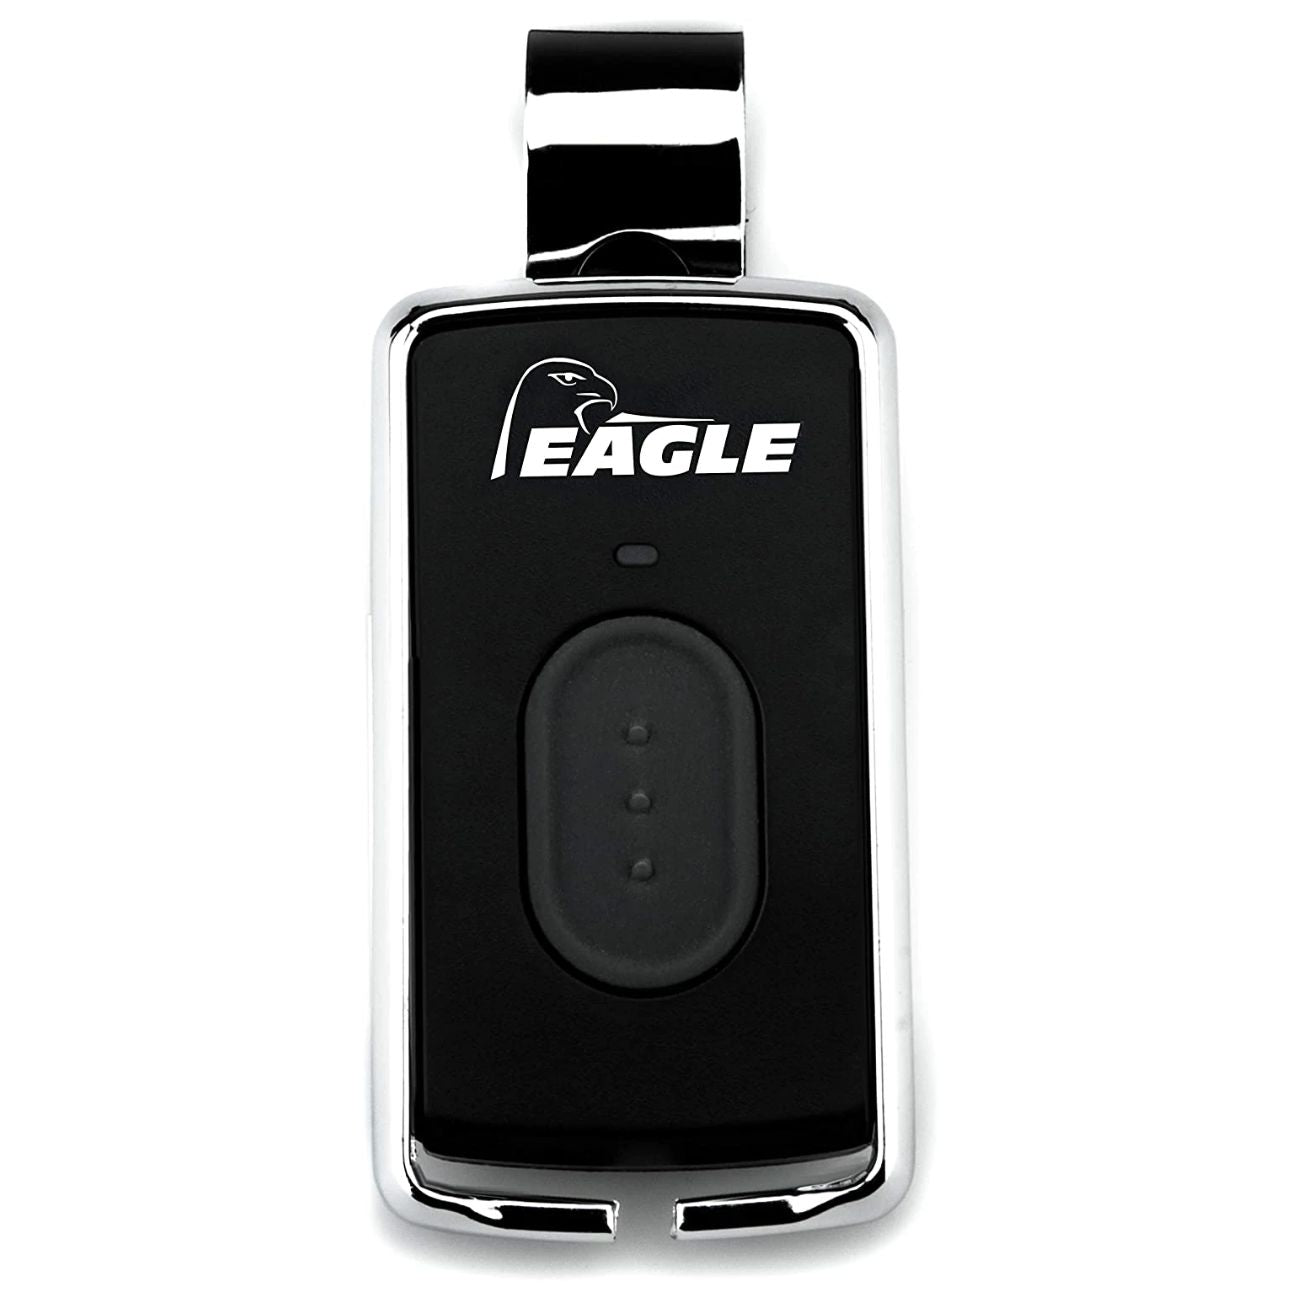 Eagle EG642 Remote Control (Visor)